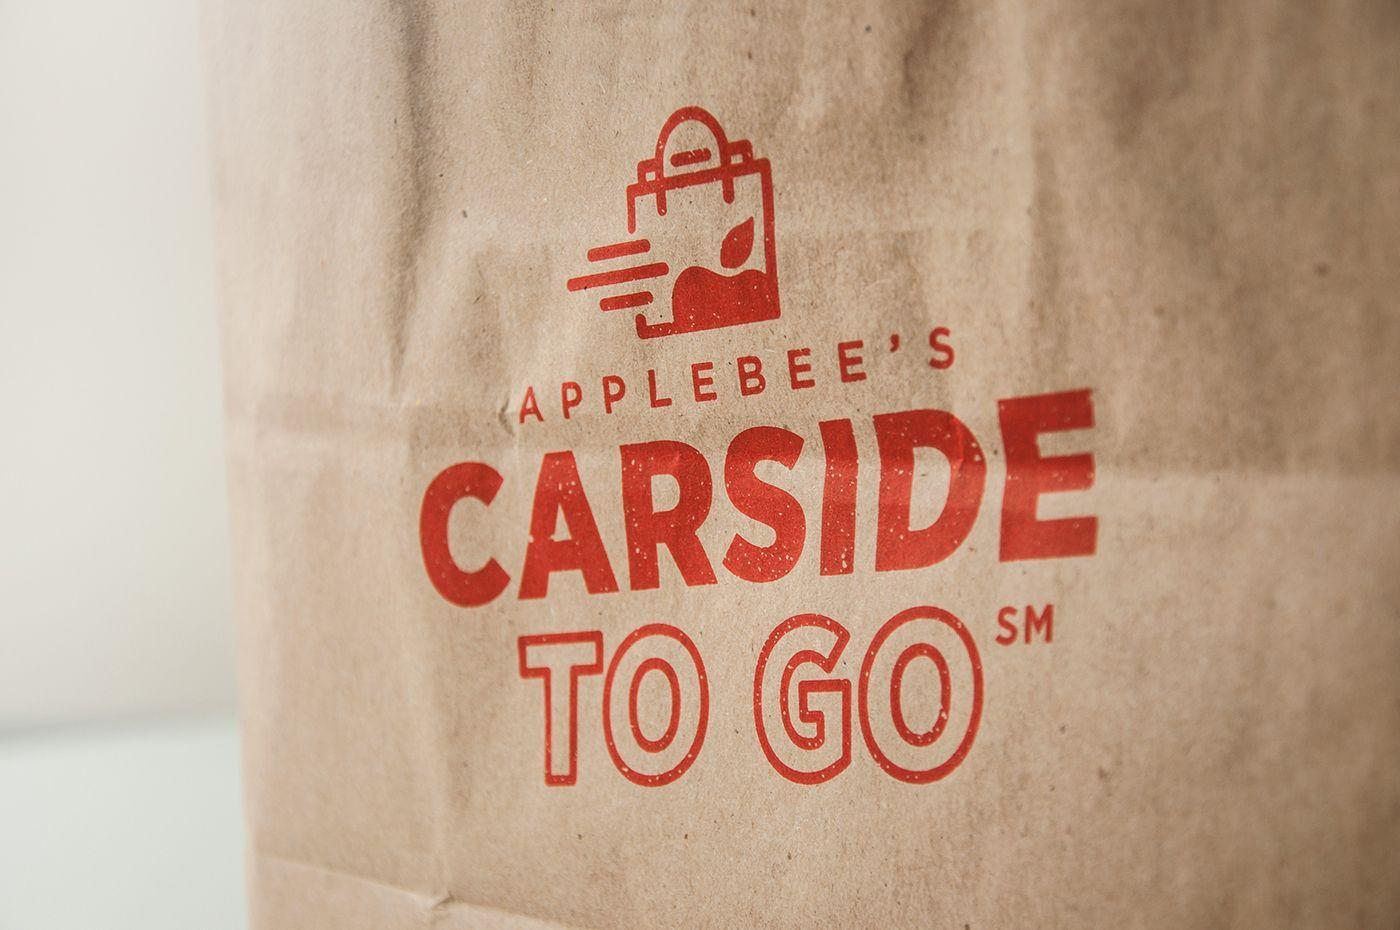 Applebee's Carside Logo - Applebee's Carside To Go. Logos / Indentities. Logos